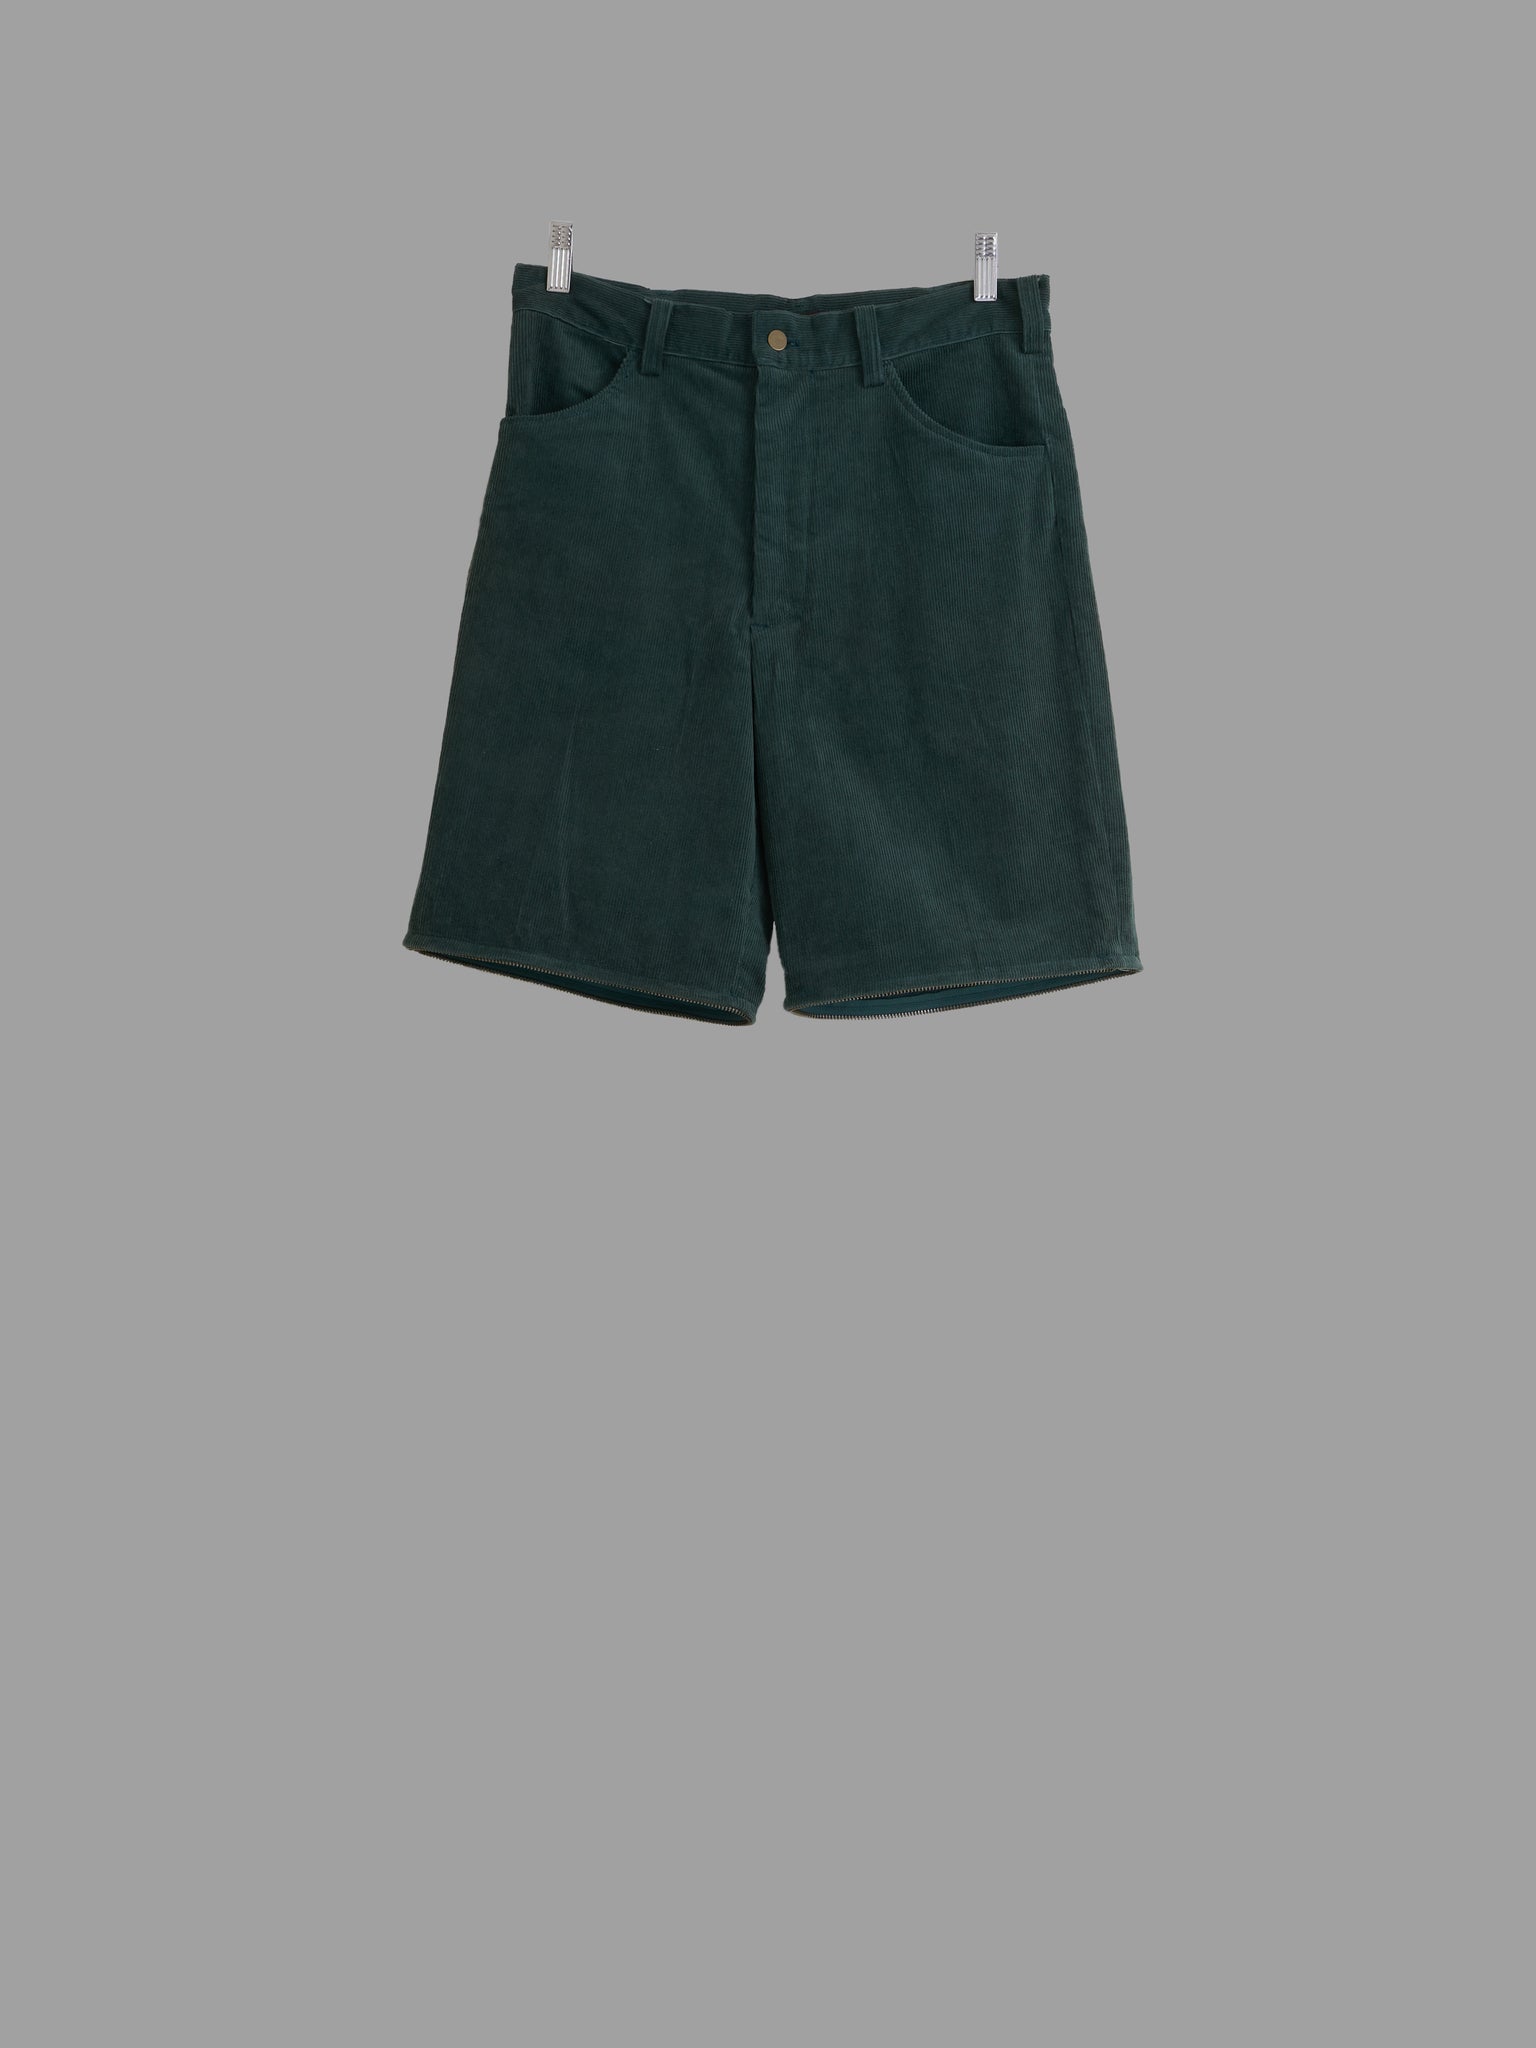 Keita Maruyama Homme 1990s dark green corduroy two way zip off trousers - size M